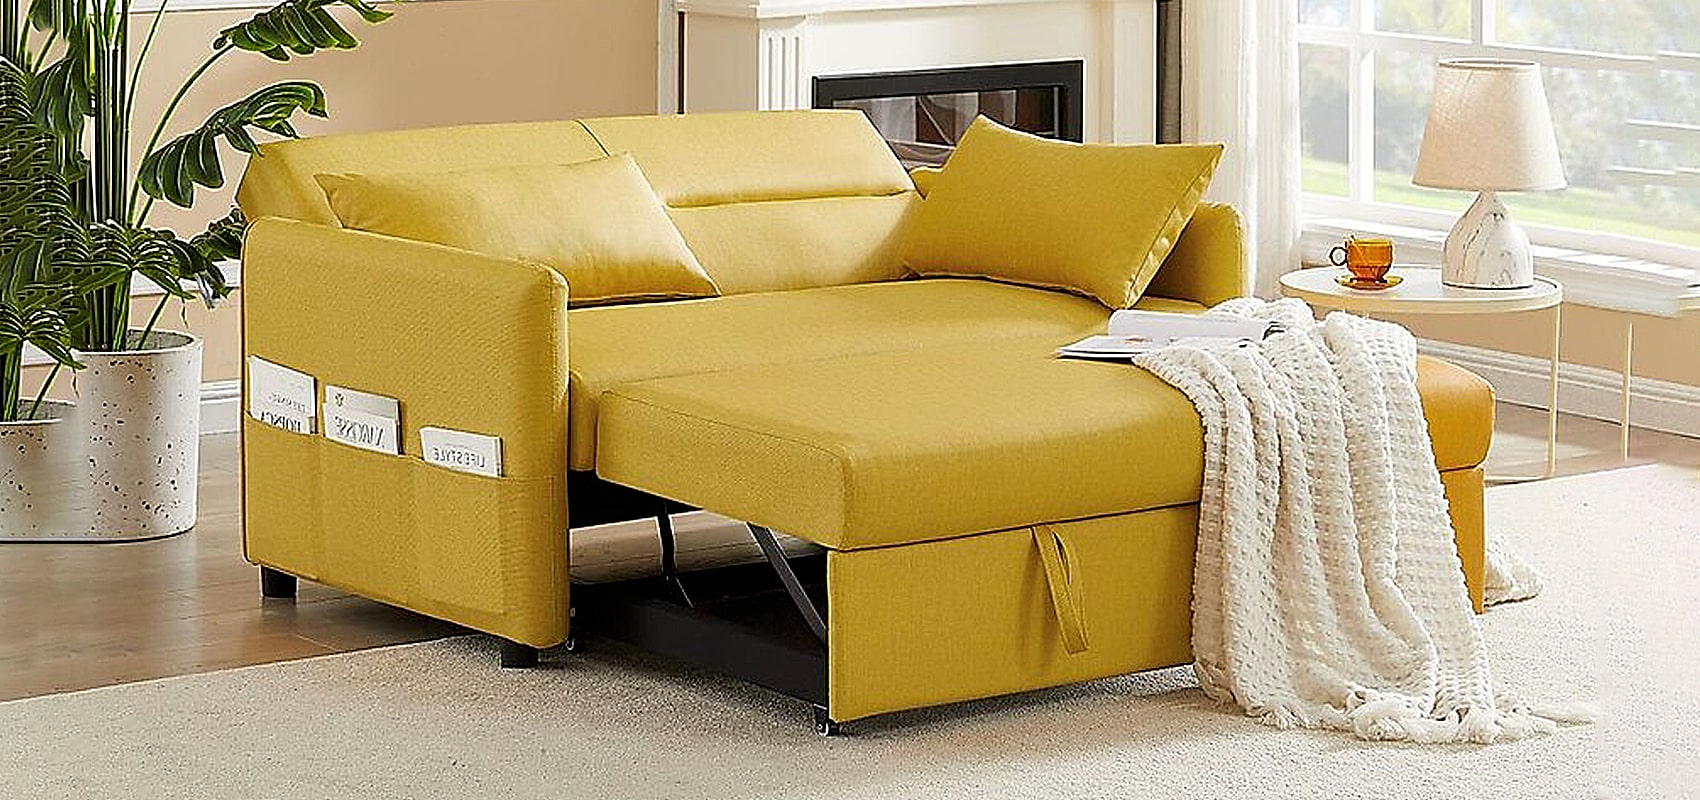 Yellow Sofa Sleeper | Yellow Sofa Bed | Yellow Couch Sleeper: Versatility and Style